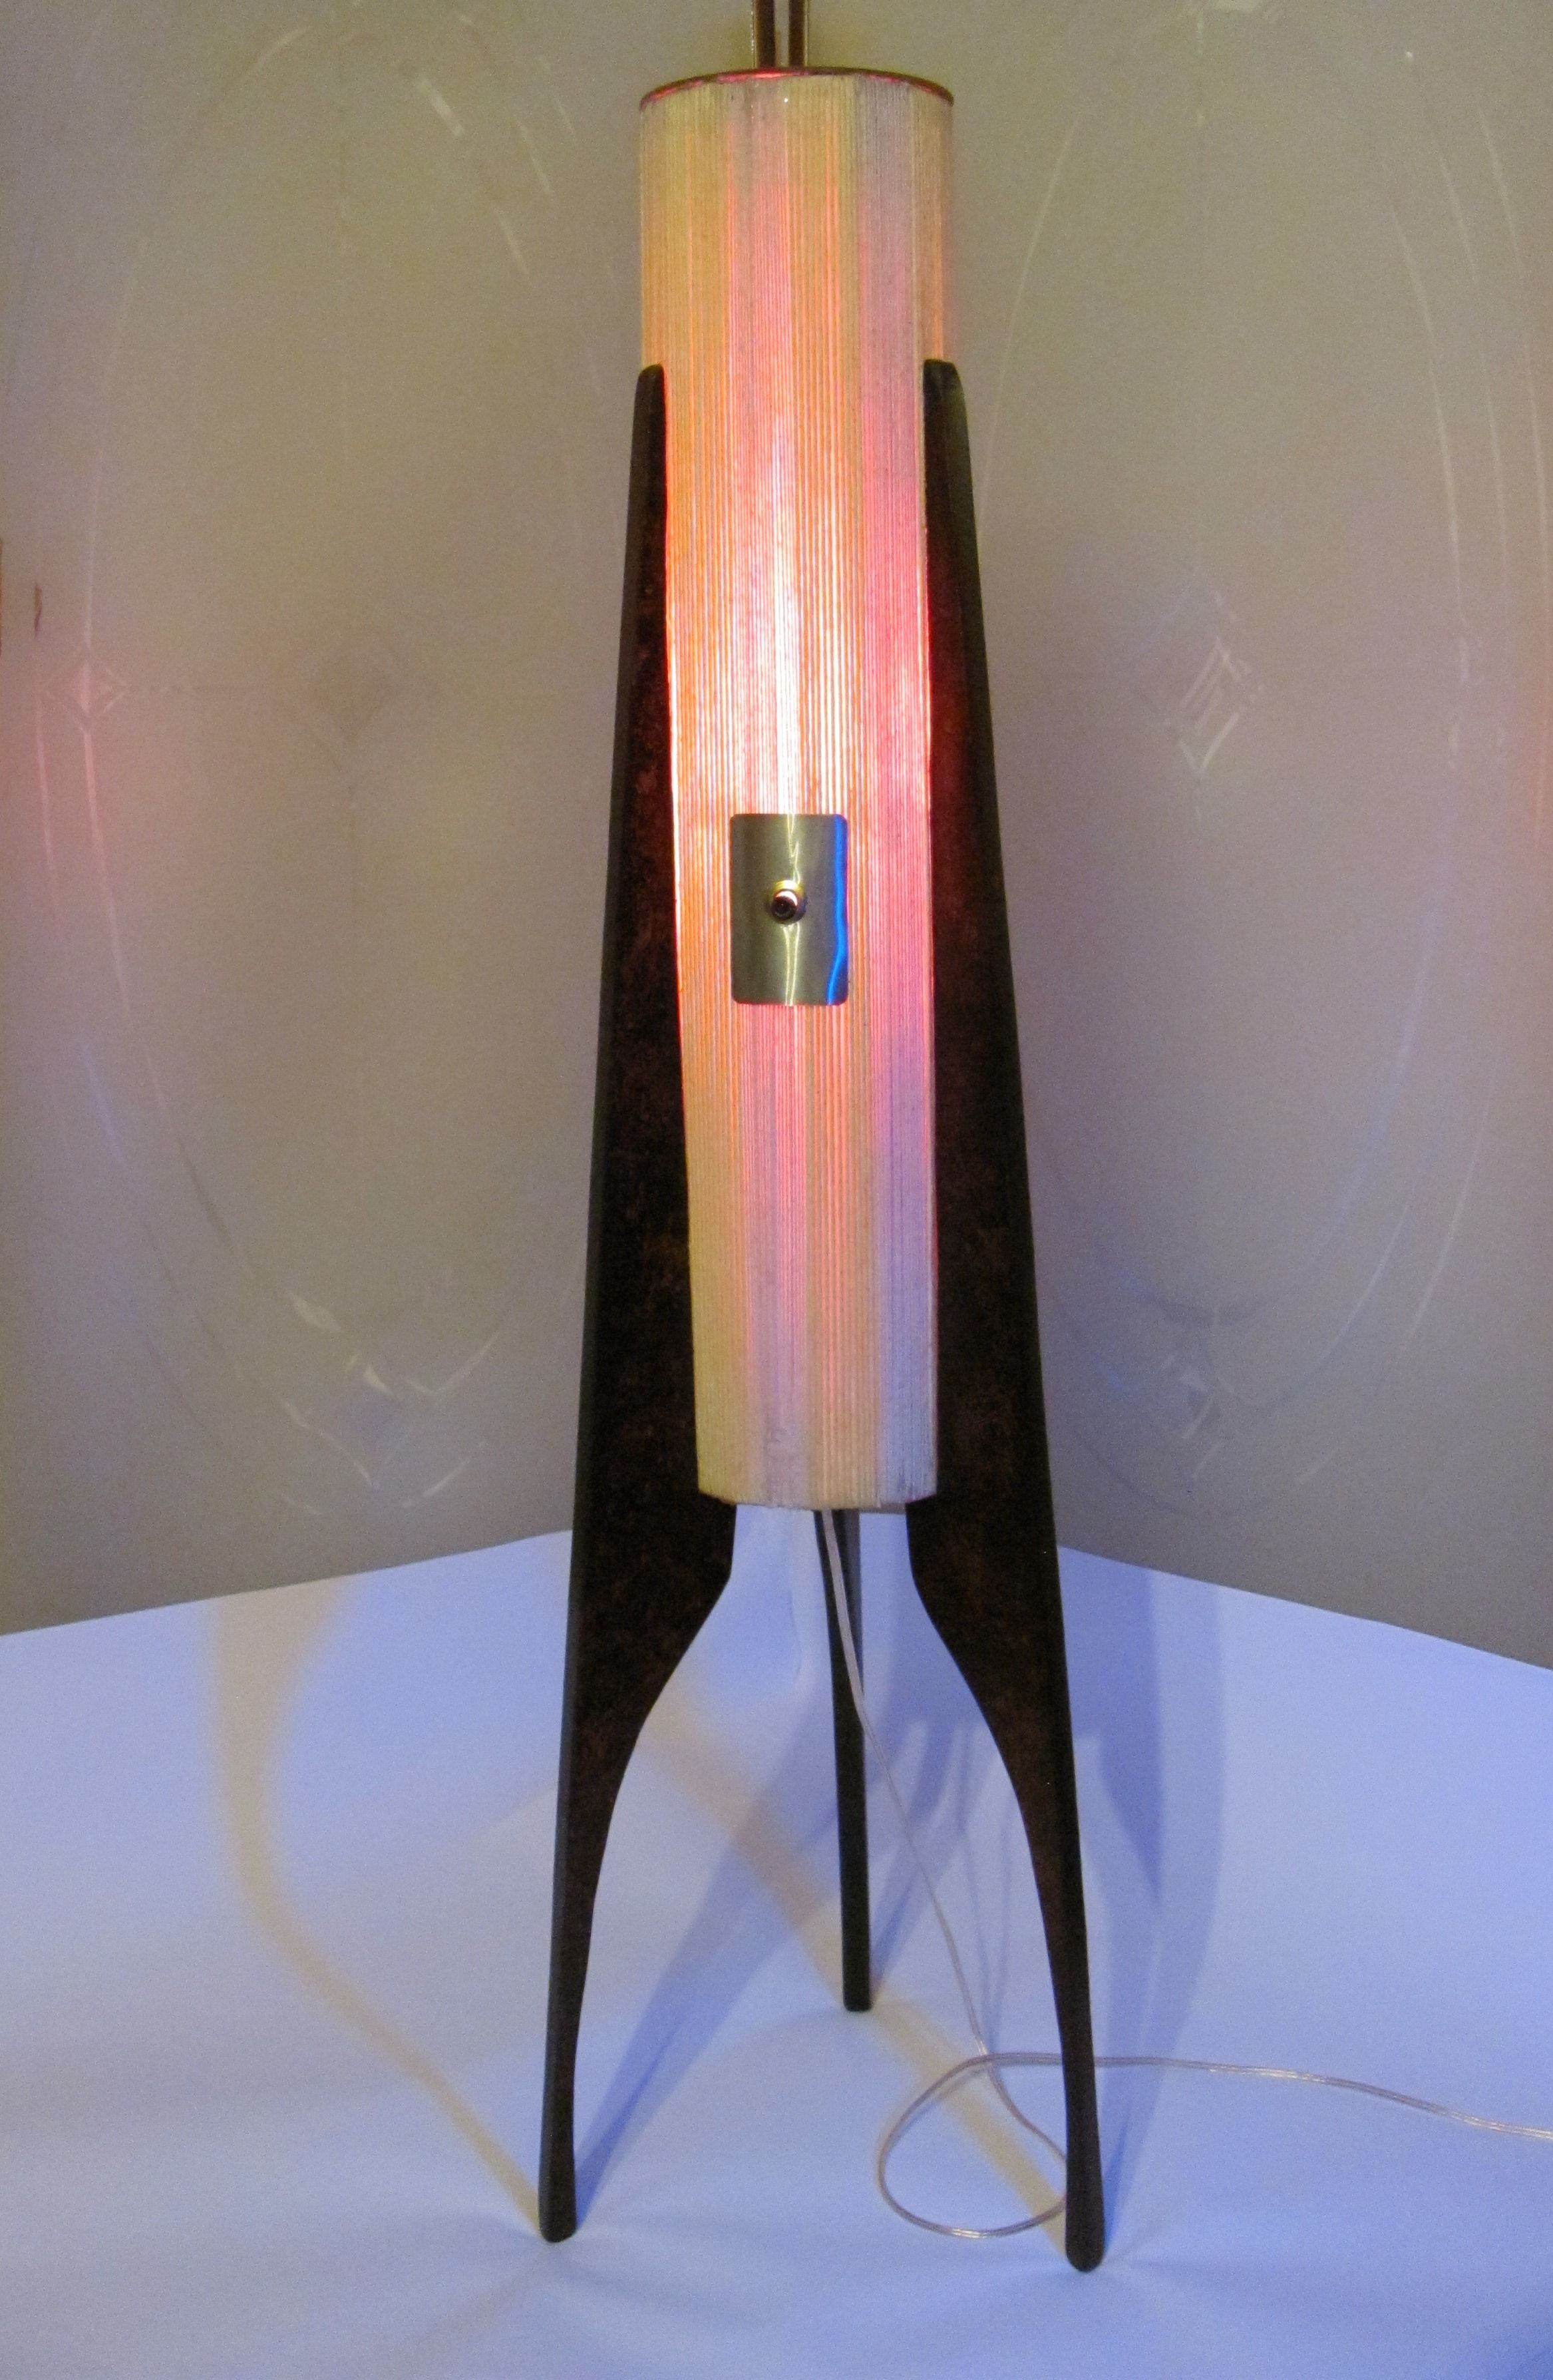 Retro Rocket Series Slk Slank Lys Slim Light Danish pertaining to dimensions 2334 X 3576